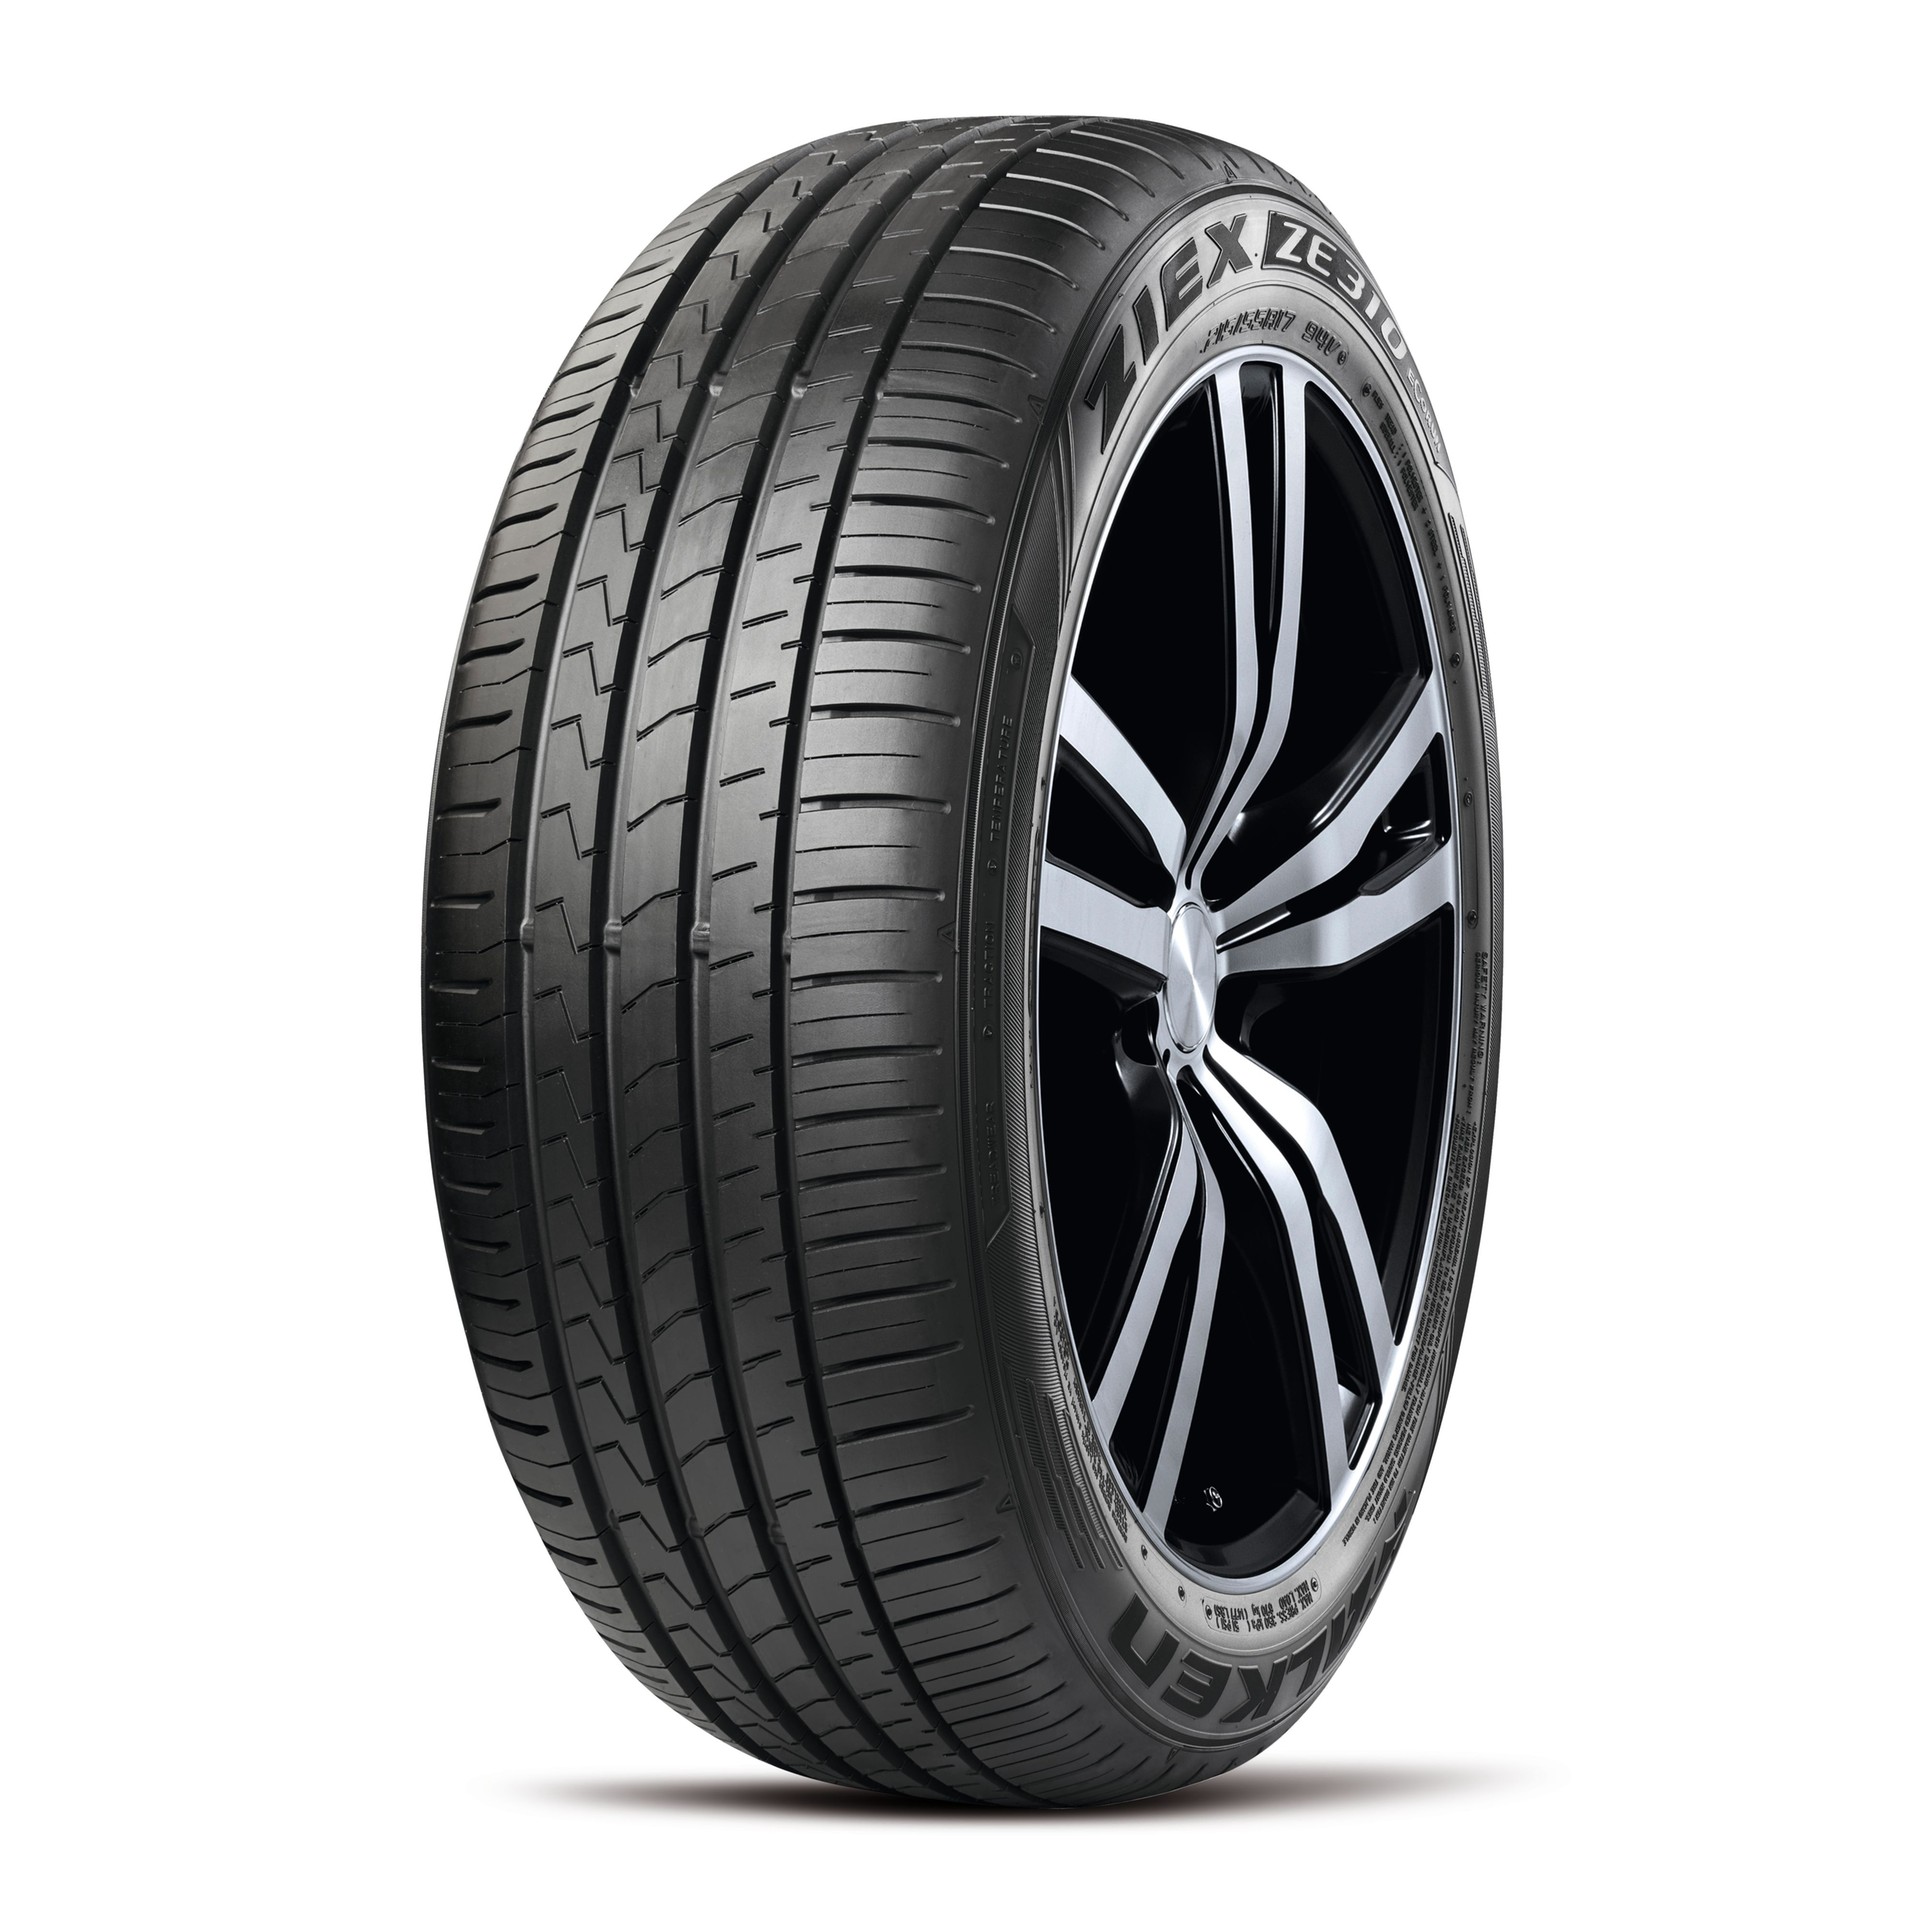 2 x Falken ZE310 High Performance Road Tyres 175/65/R15 84H 175 65 15 